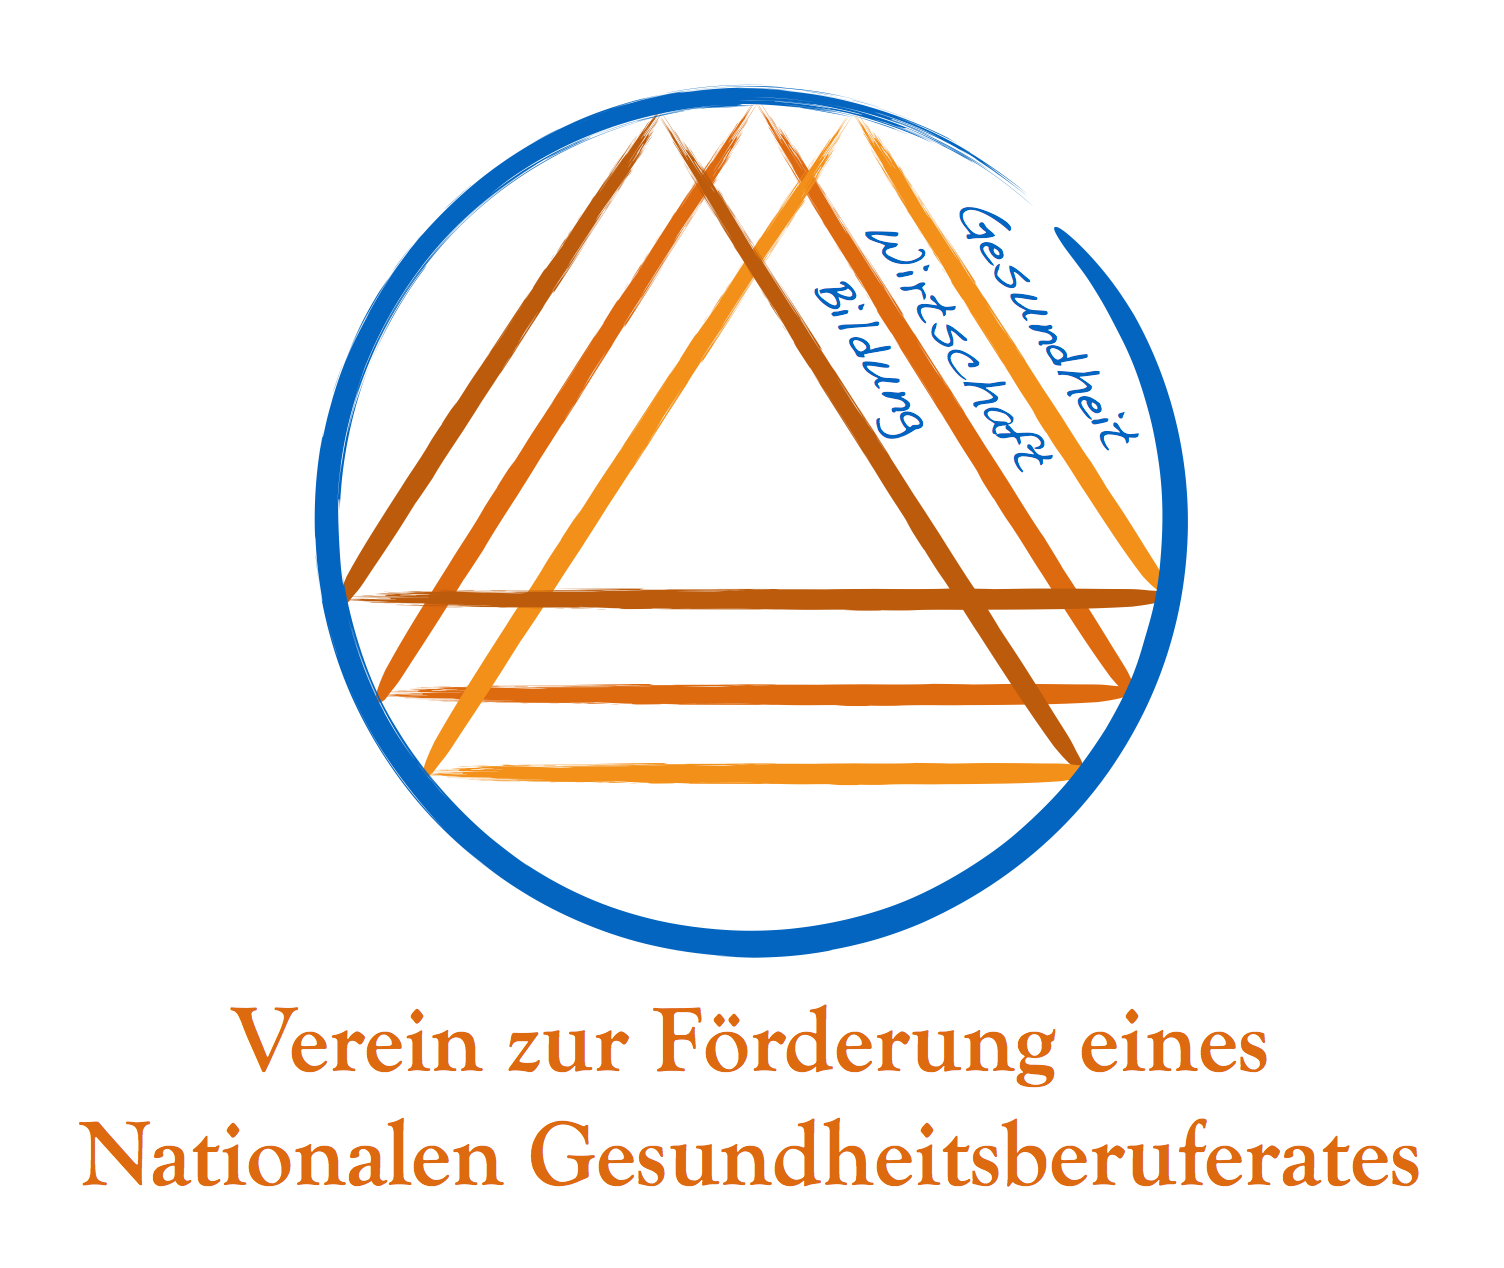 NGBR logo